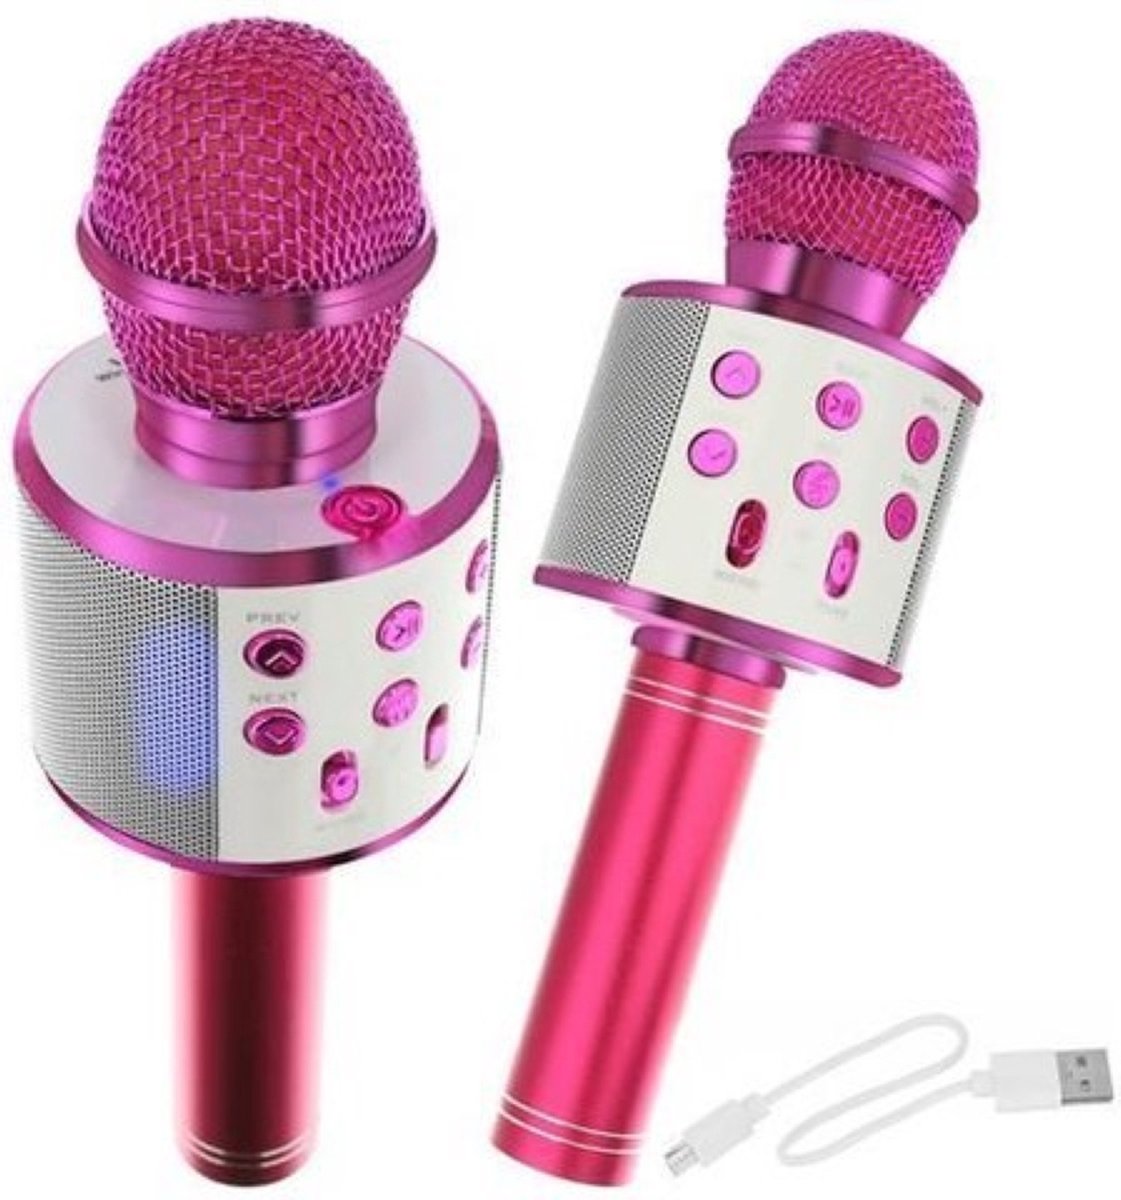 Oneiro's Luxe Karaoke microphone with pink speaker